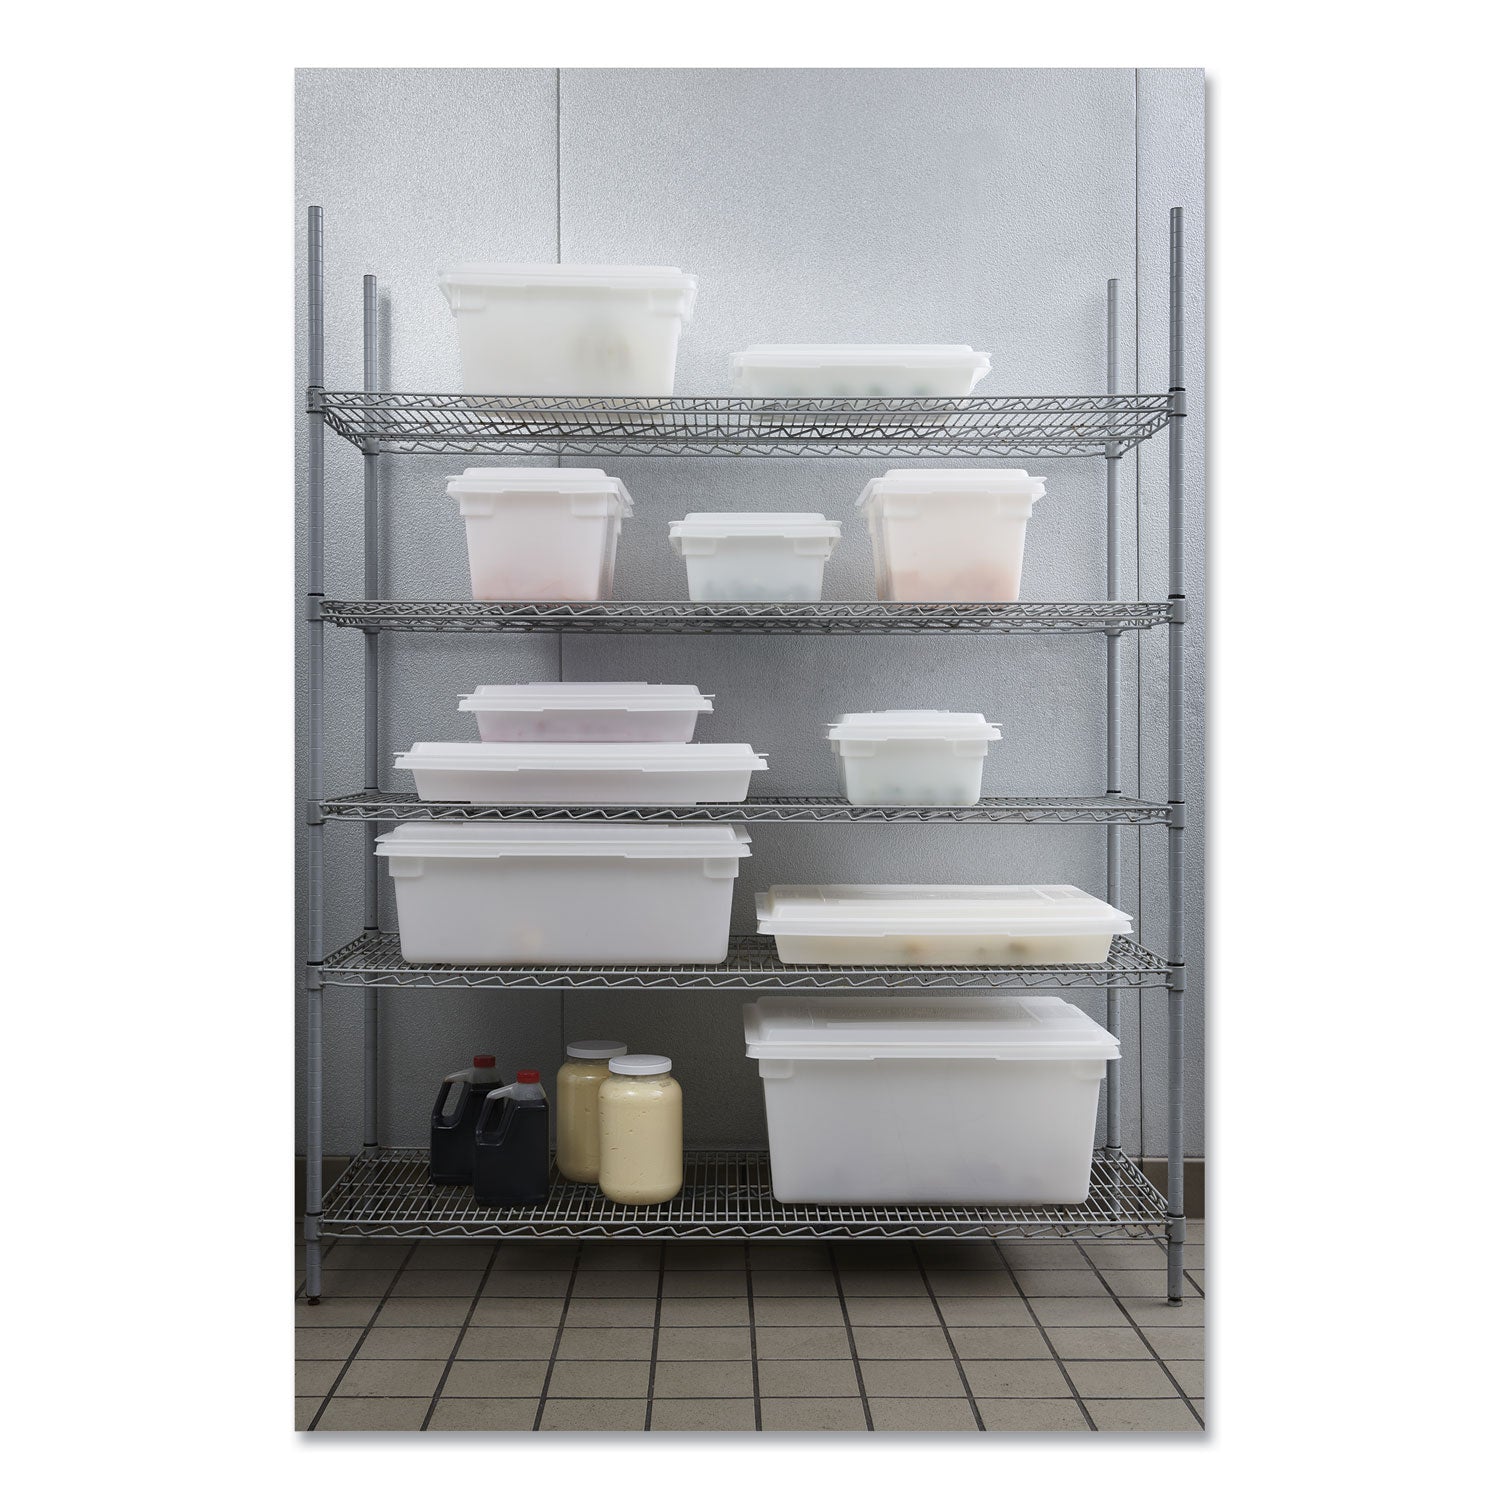 Food/Tote Boxes, 21.5 gal, 26 x 18 x 15, White, Plastic - 